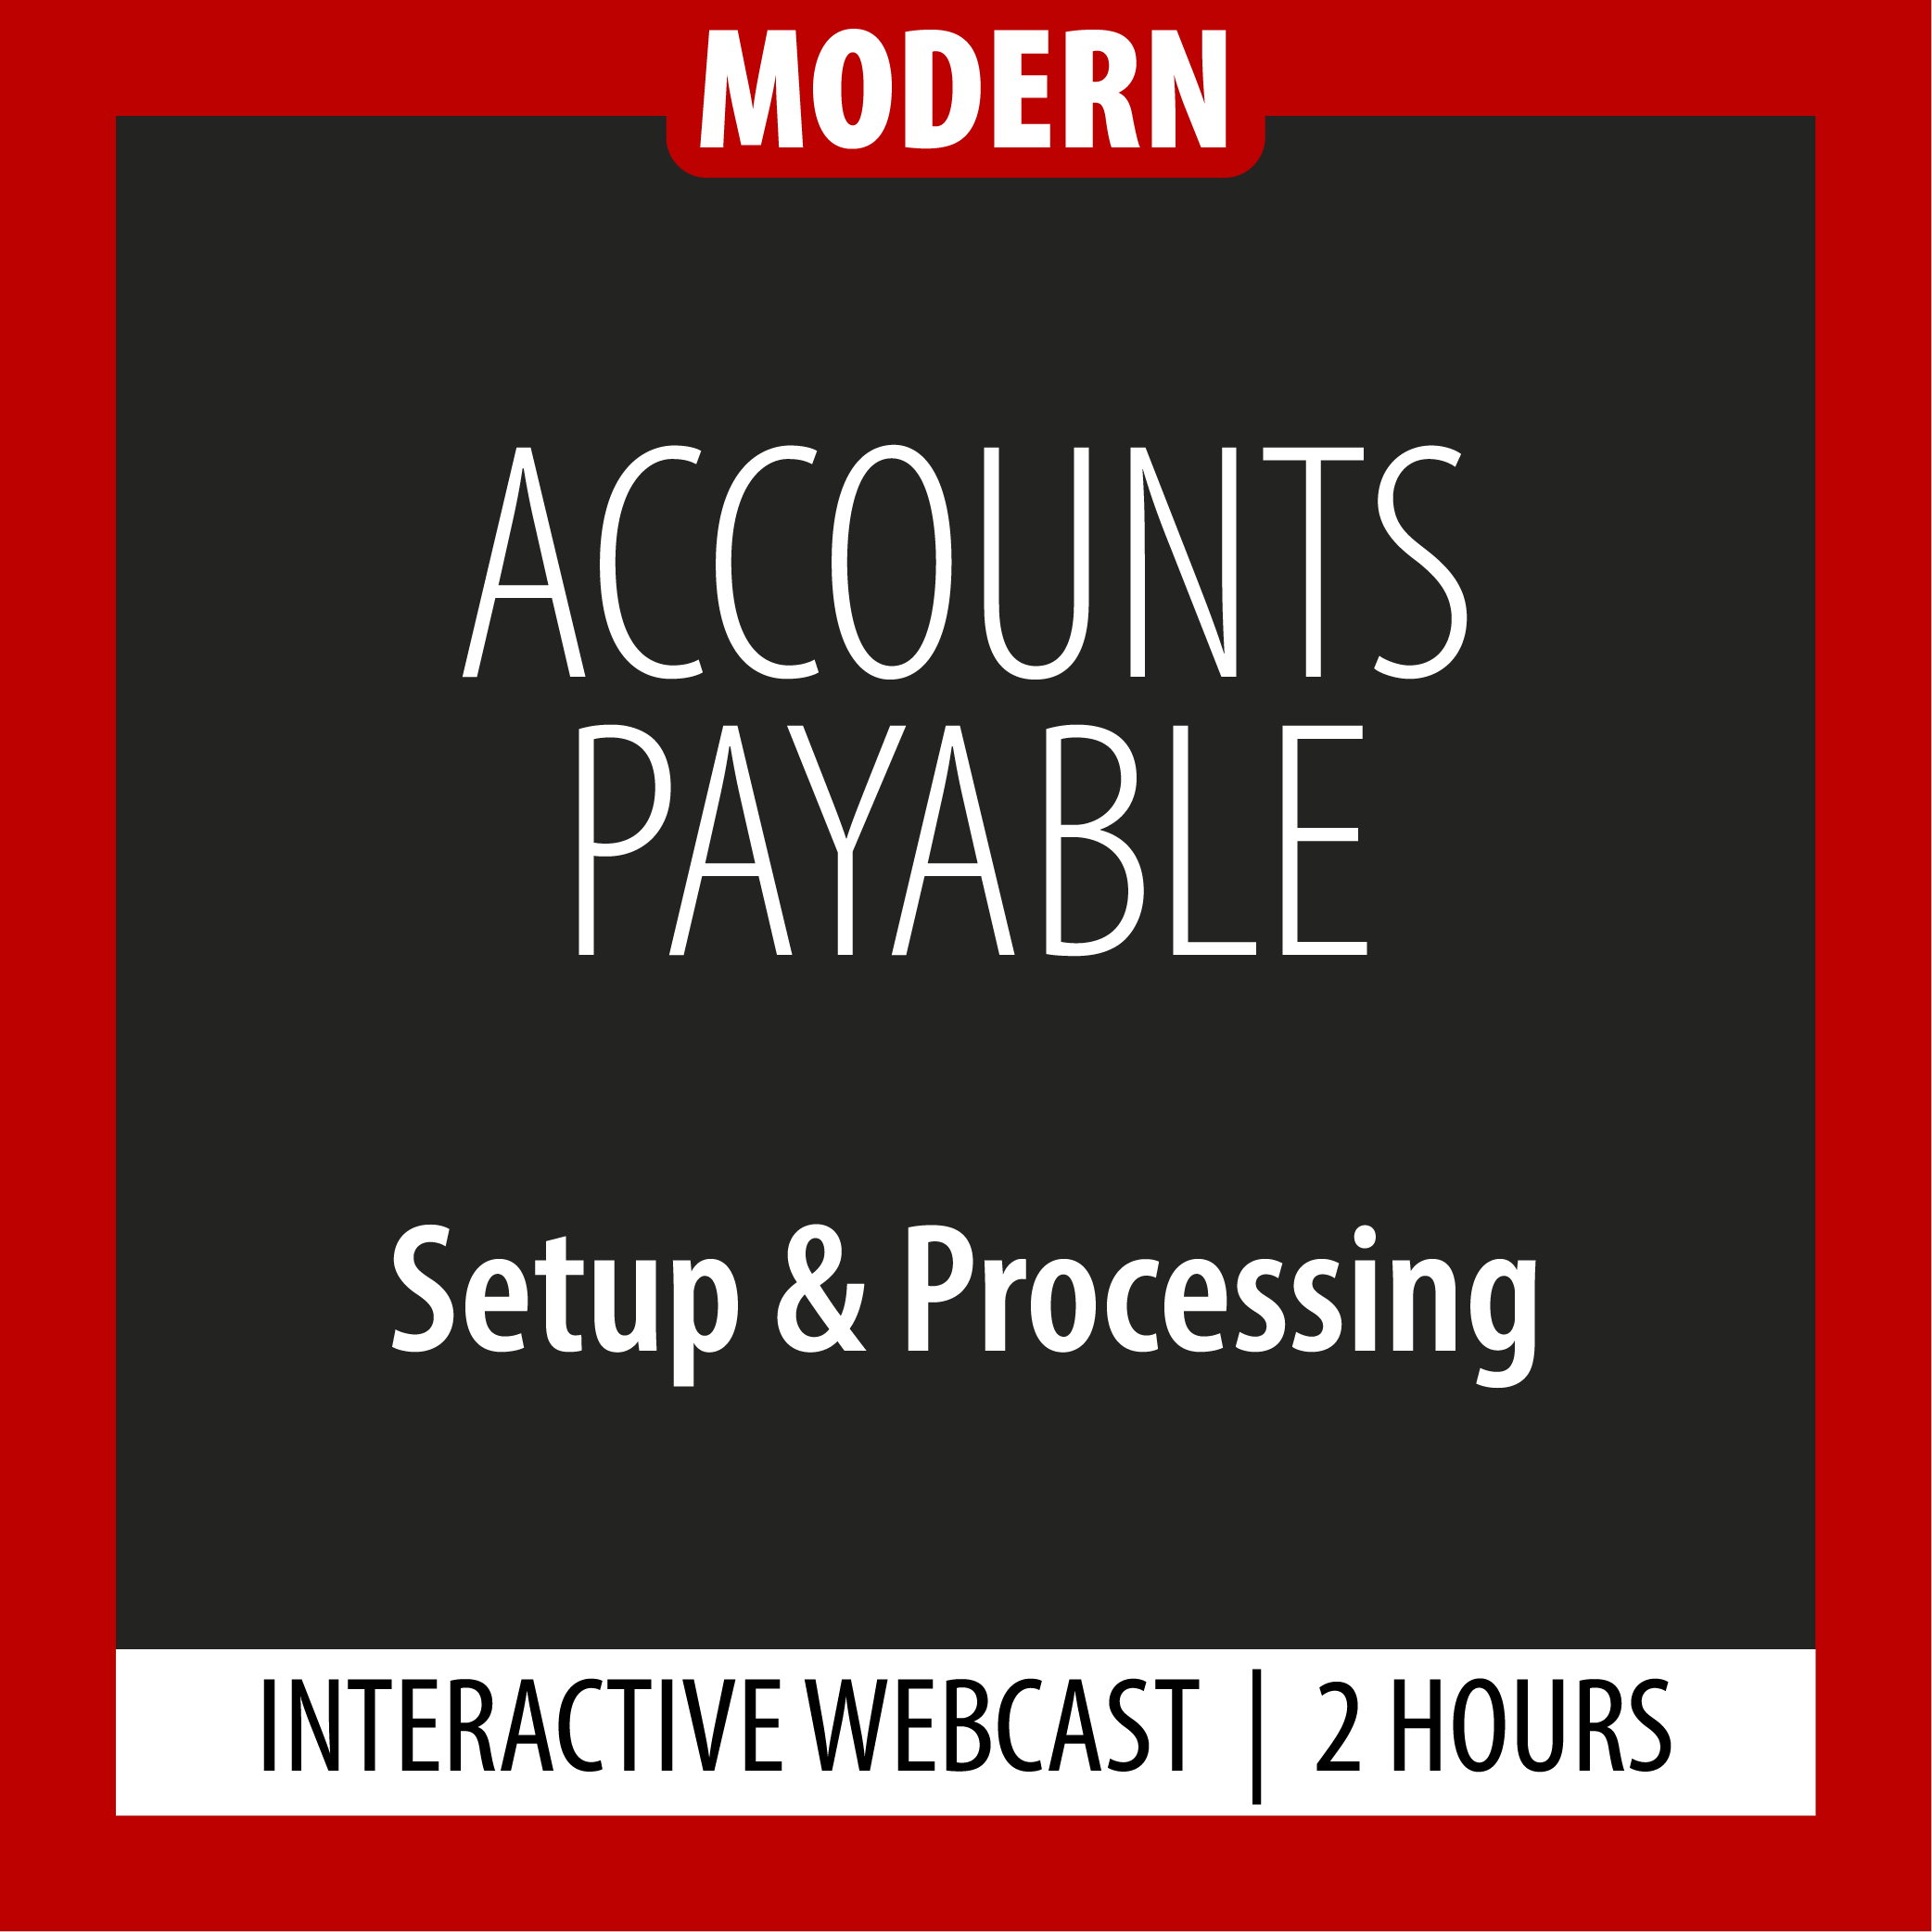 Modern - Accounts Payable - Setup & Processing - Webcast - 2 Hours